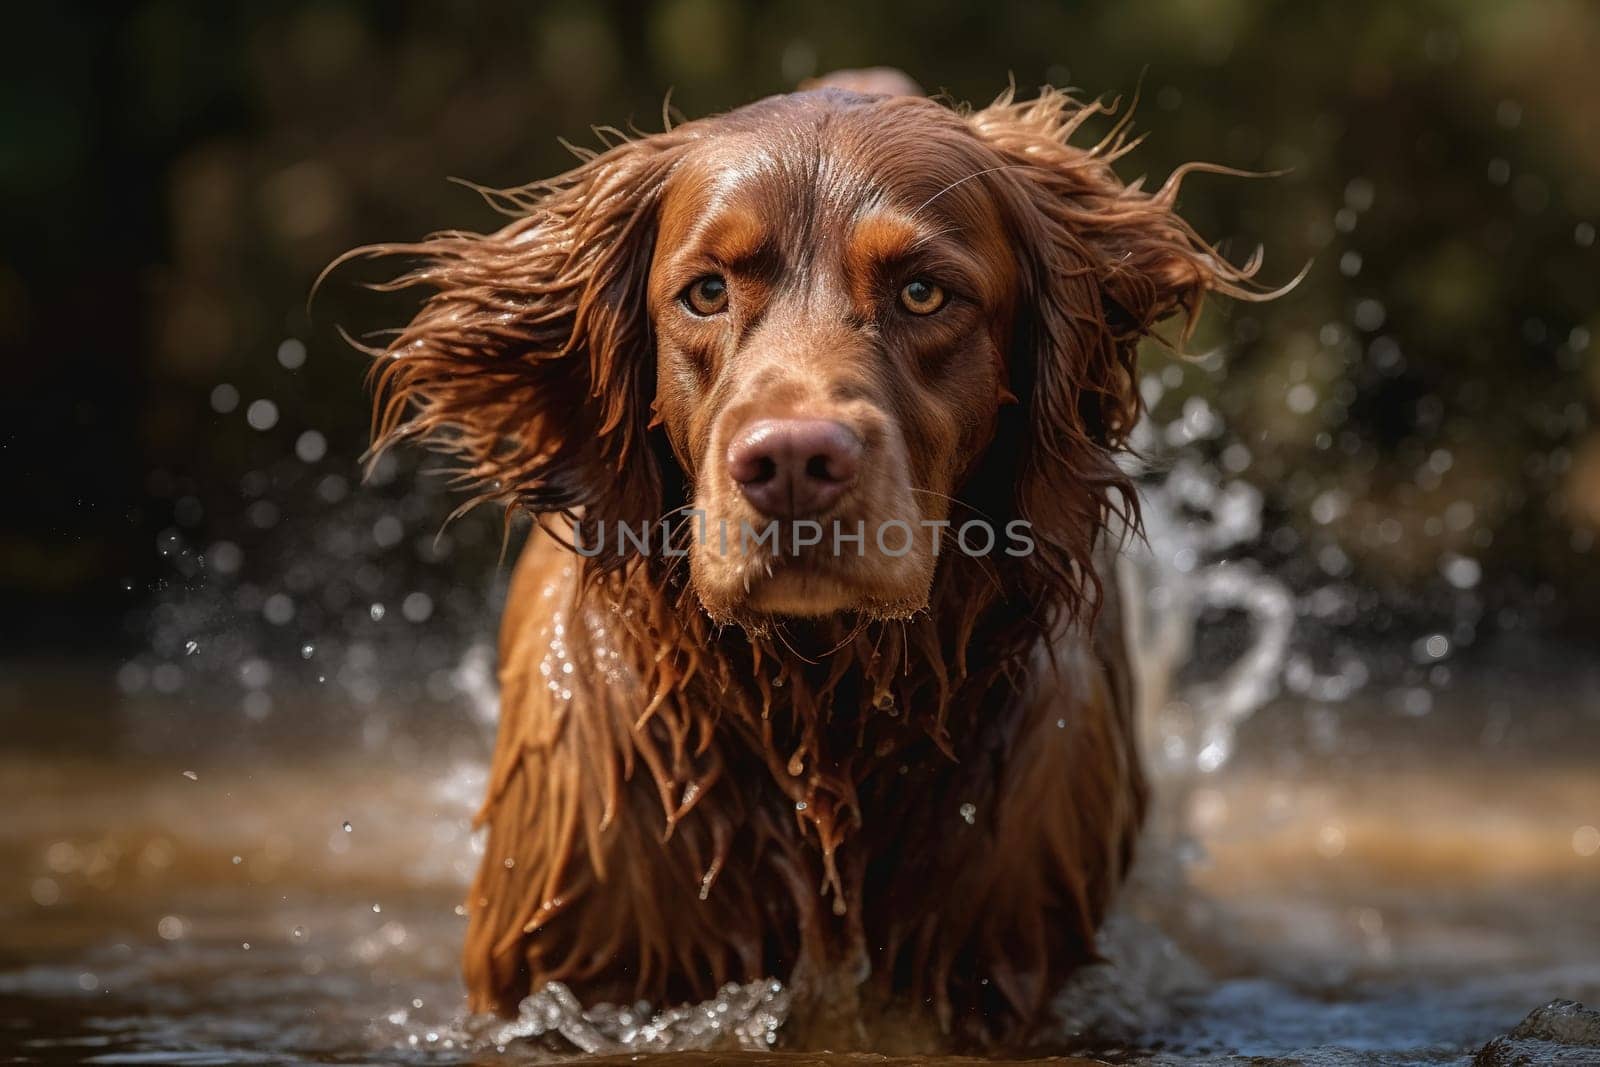 Dog splashes, swimming in water, drops flying. by GekaSkr